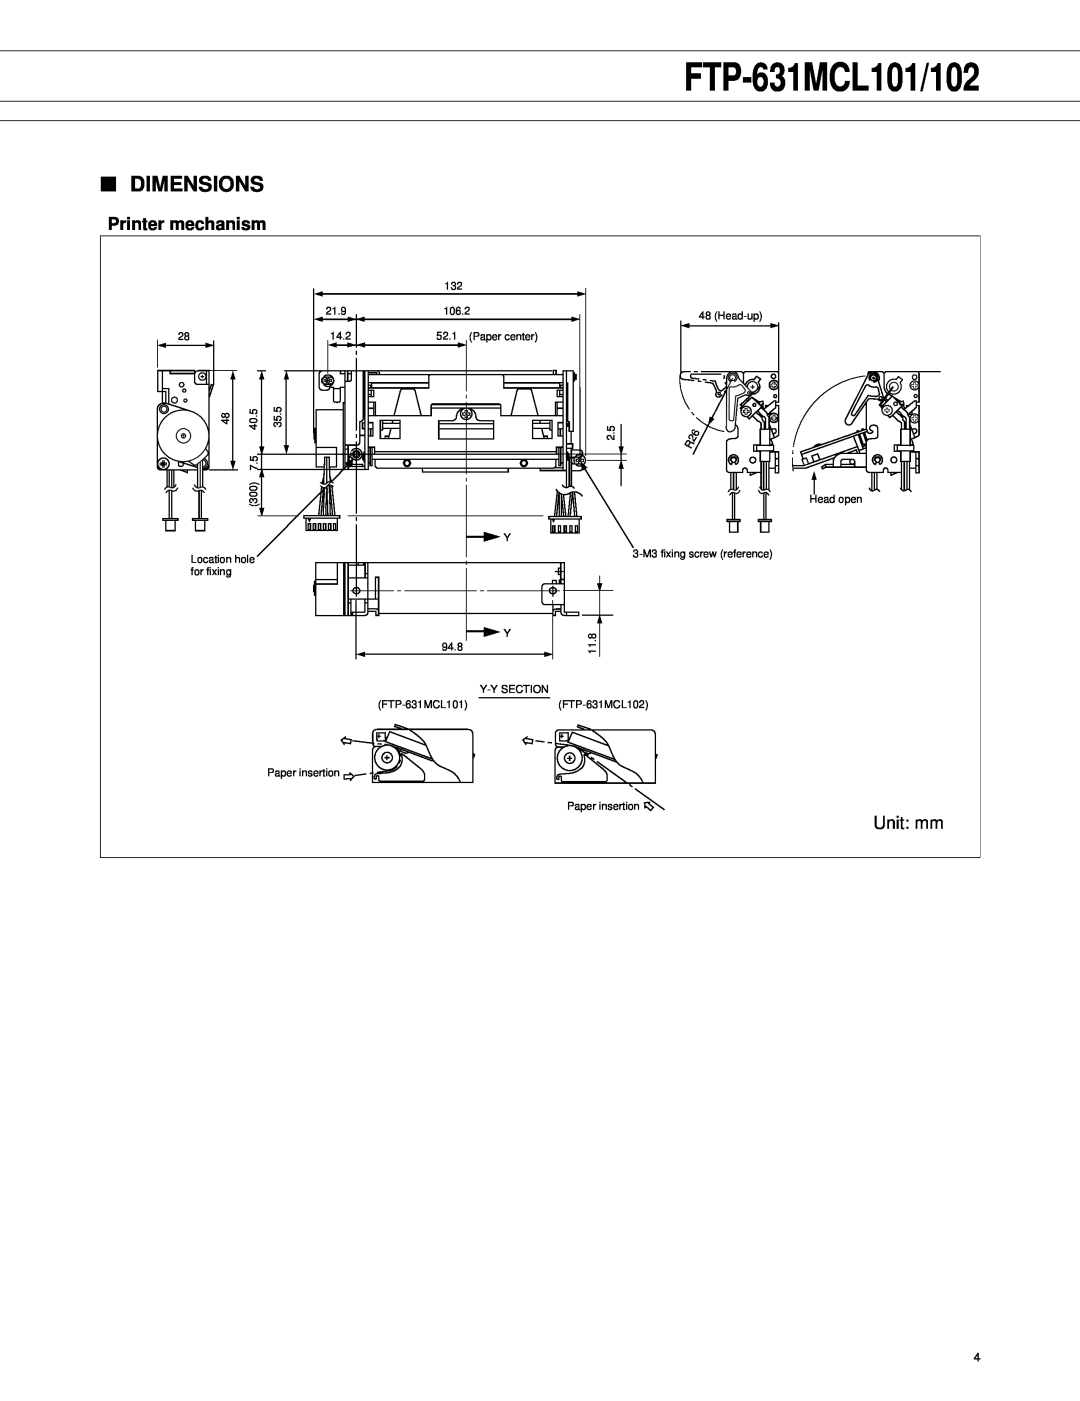 Fujitsu FTP-631MCL102 manual Dimensions, Printer mechanism, FTP-631MCL101/102 